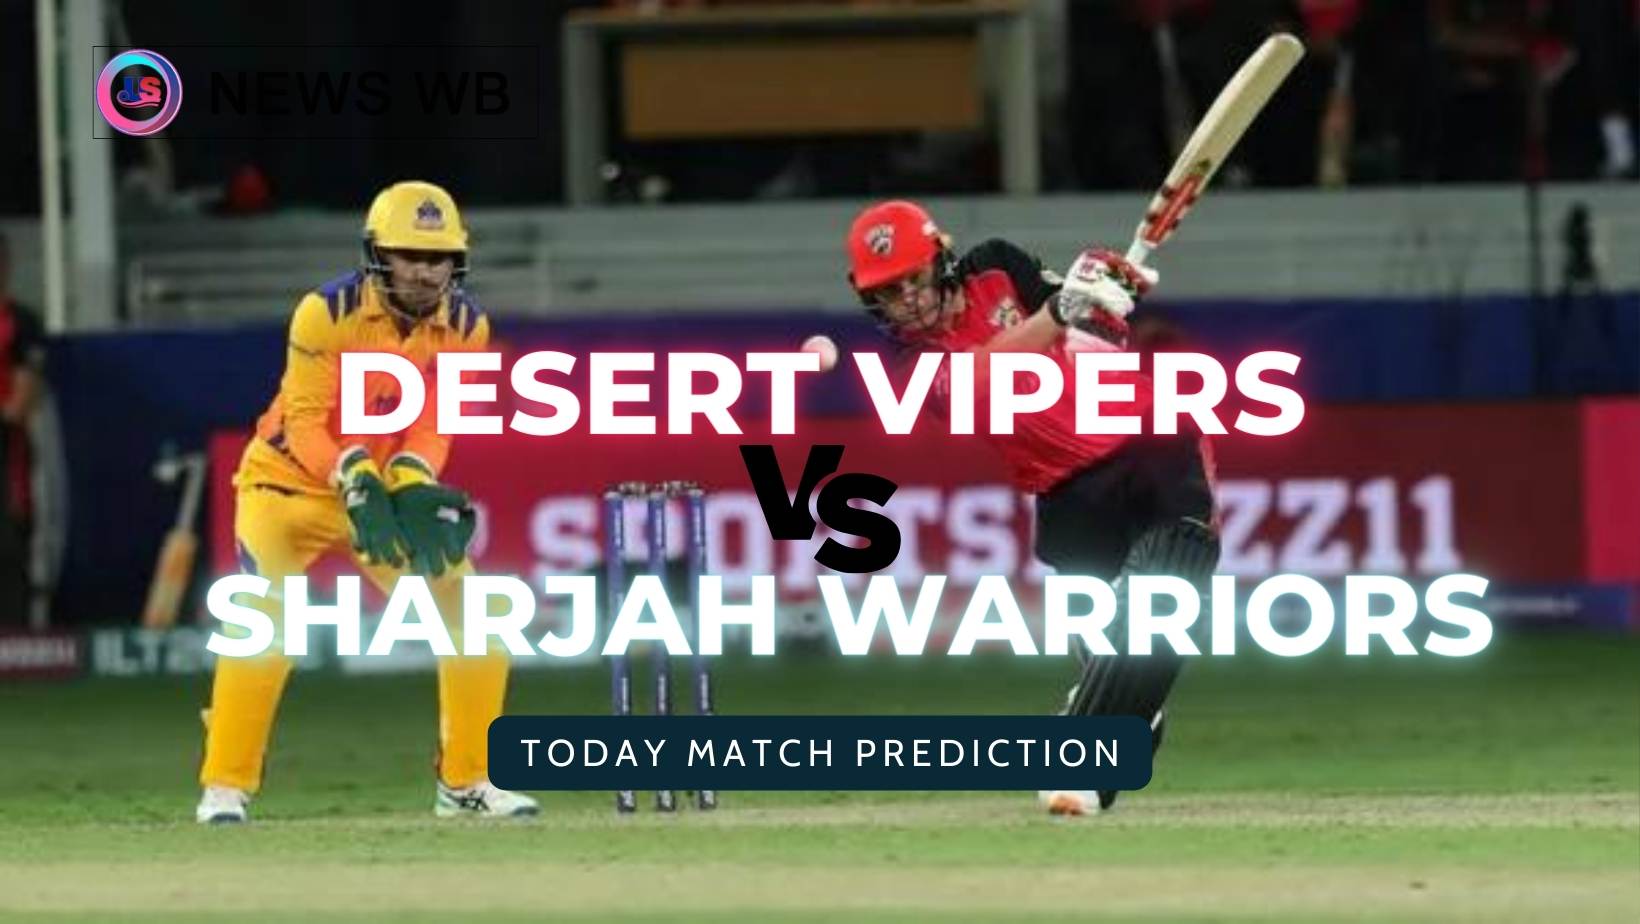 Today Match Prediction: SW vs DV Dream11 Team, Sharjah Warriors vs Desert Vipers 30th Match, Who Will Win?